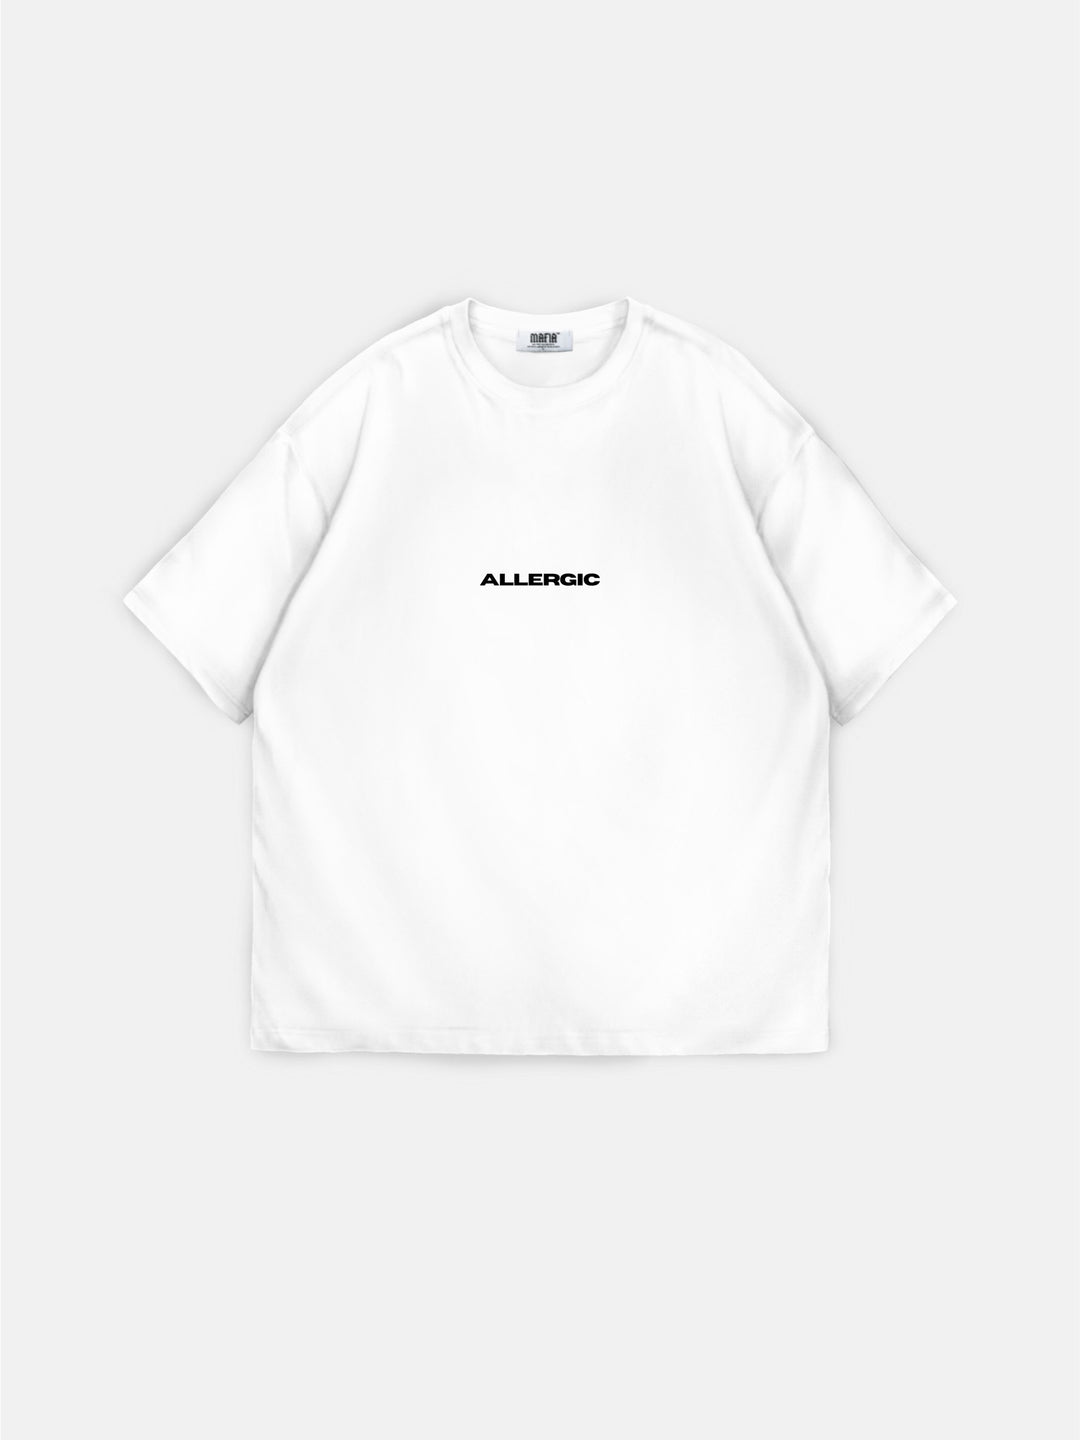 Oversize 'I am Allergic to People' T-shirt - Ecru